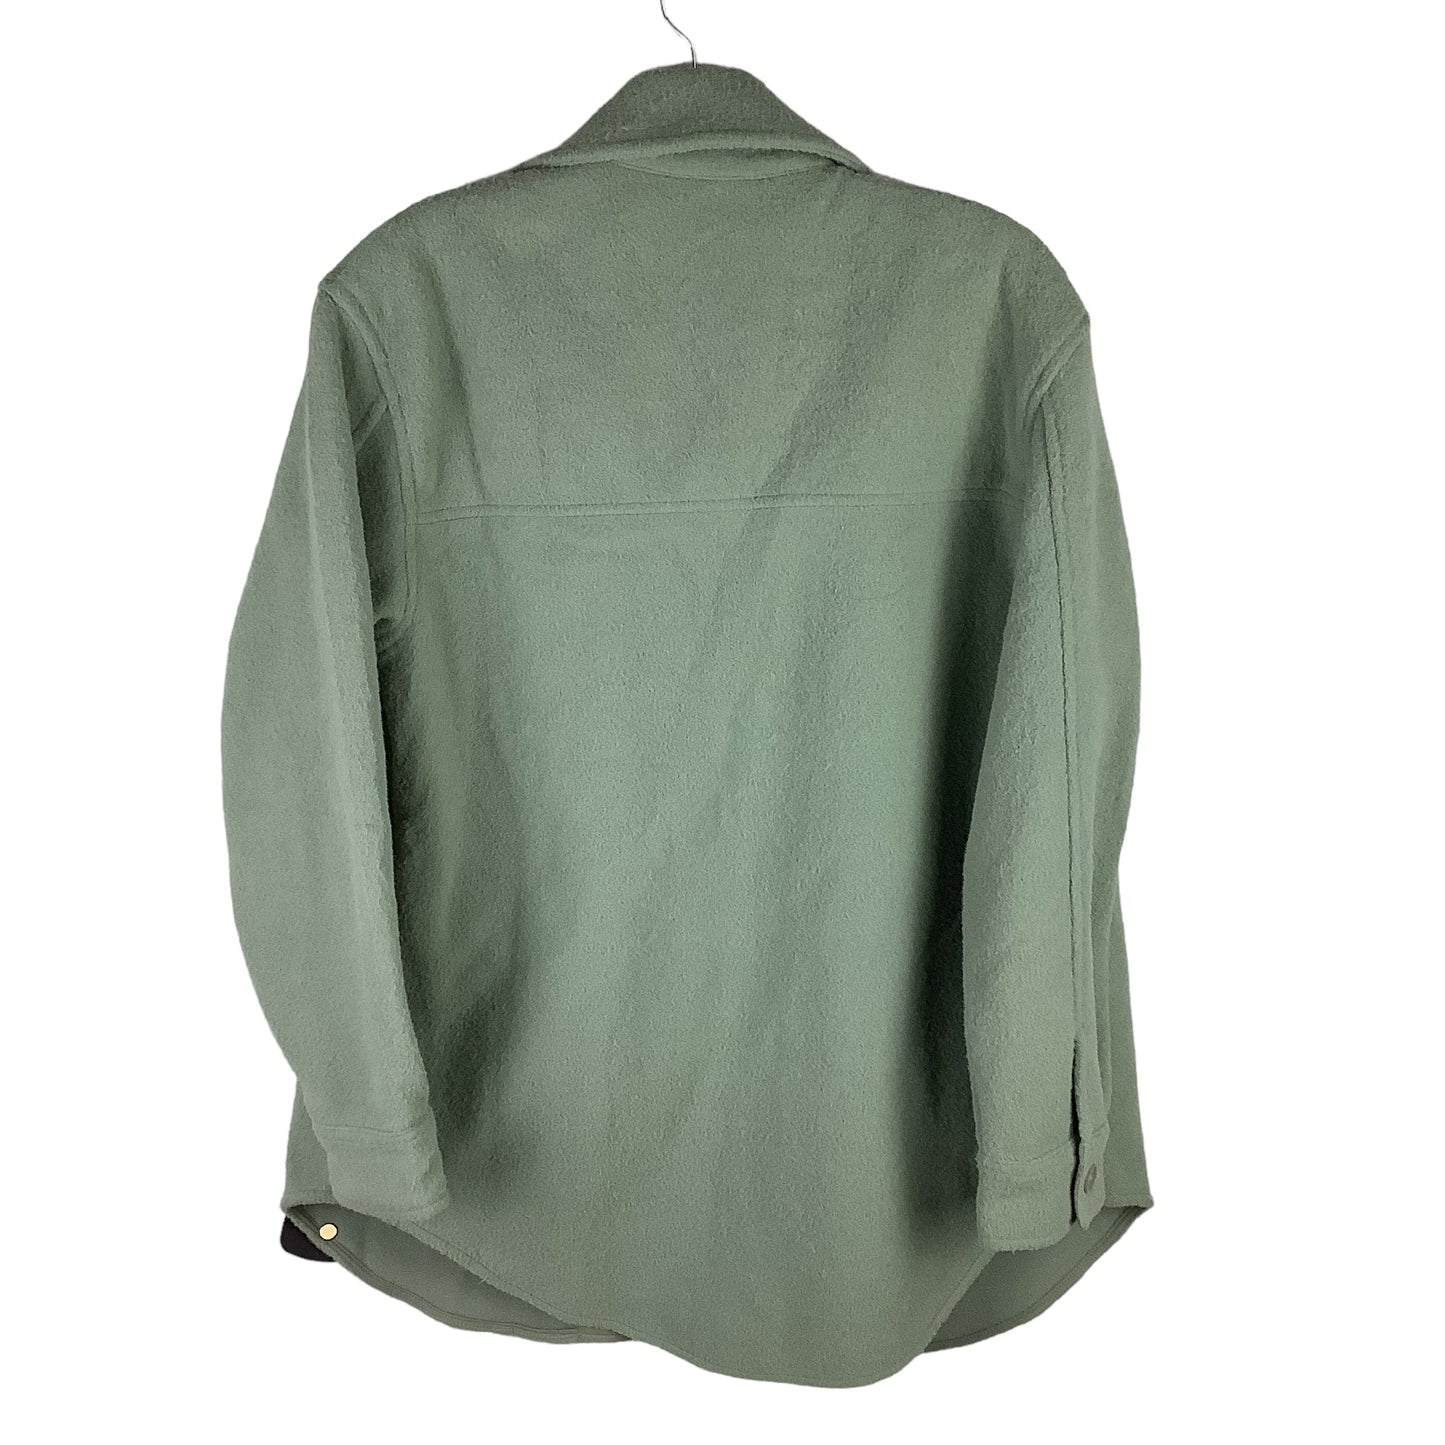 Jacket Shirt By Hilary Radley  Size: S